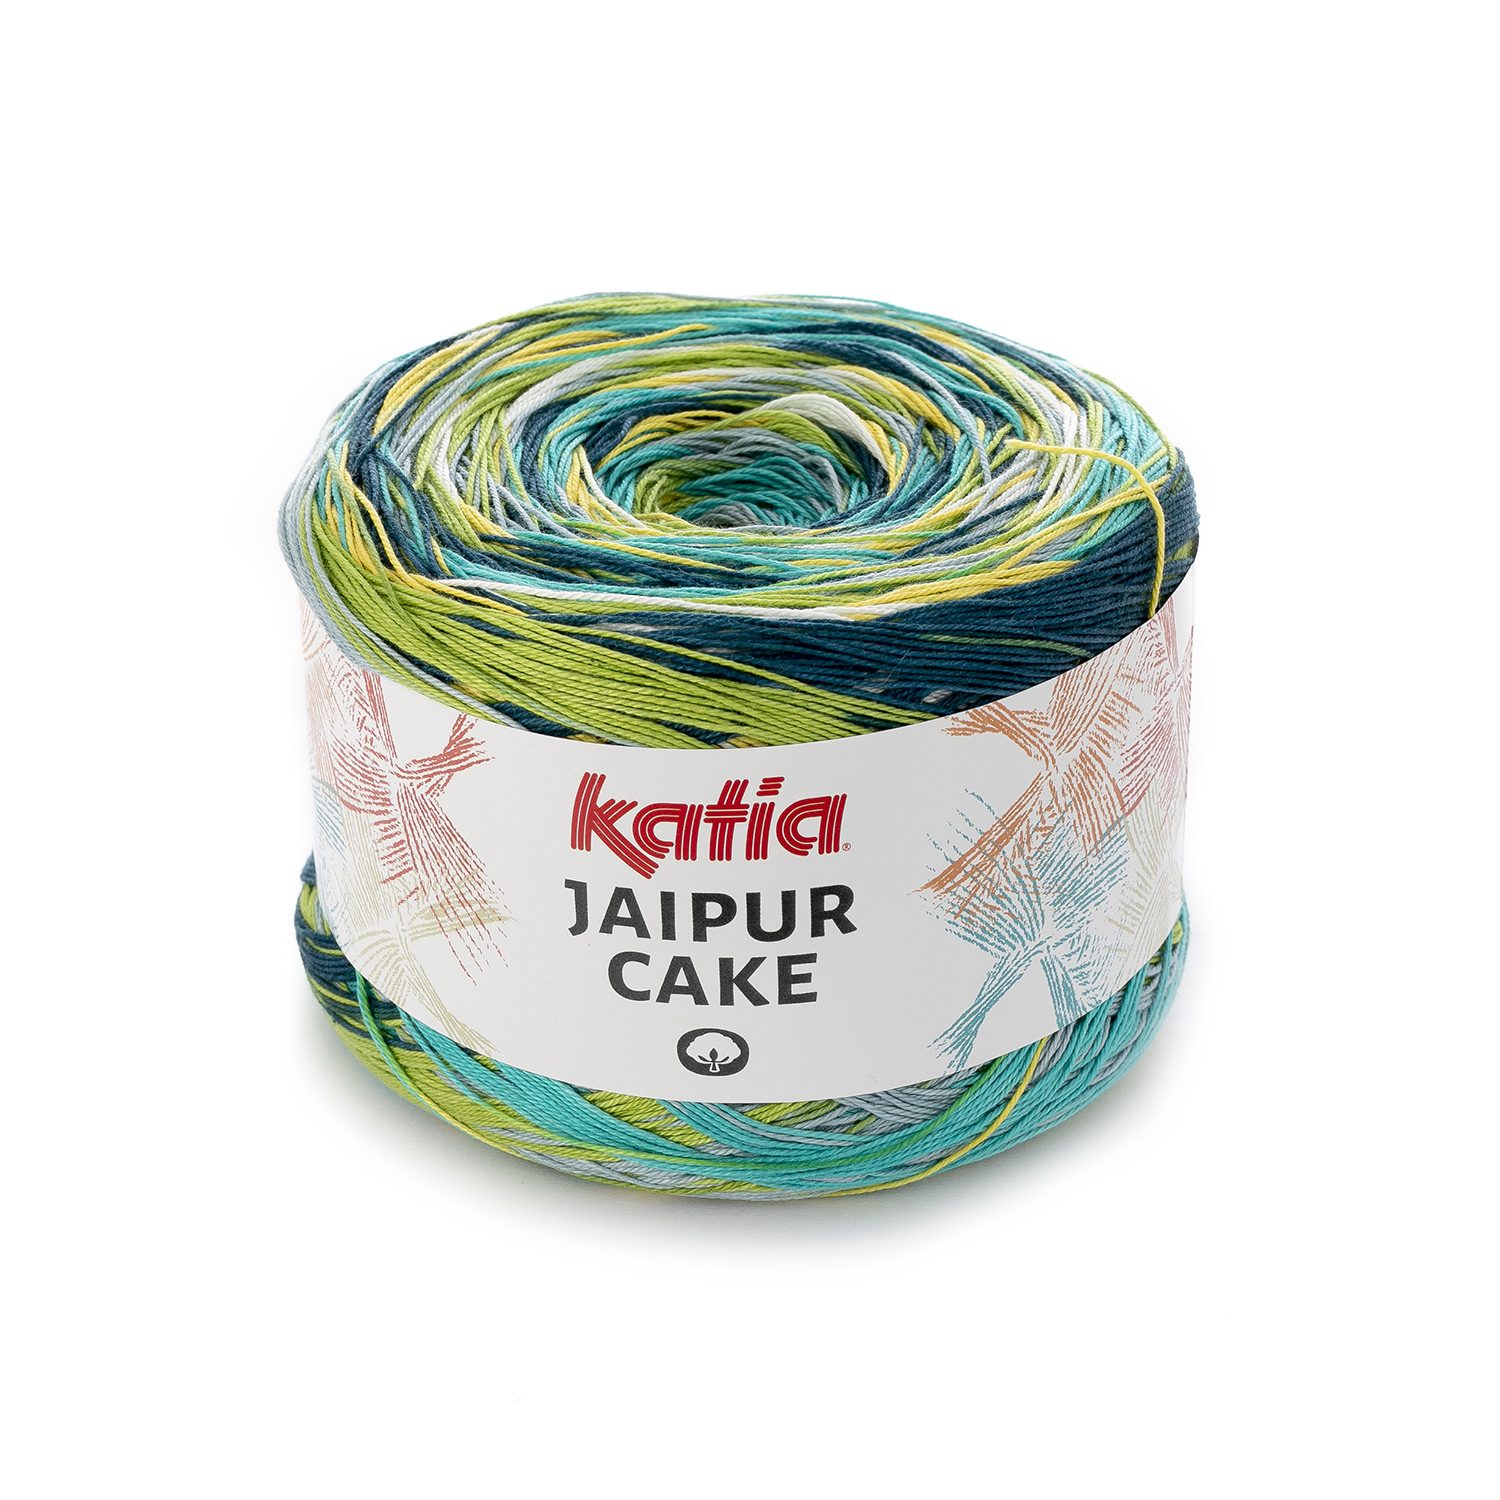 yarn-wool-jaipurcake-knit-mercerized-cotton-blue-yellow-pistachio-spring-summer-katia-405-g